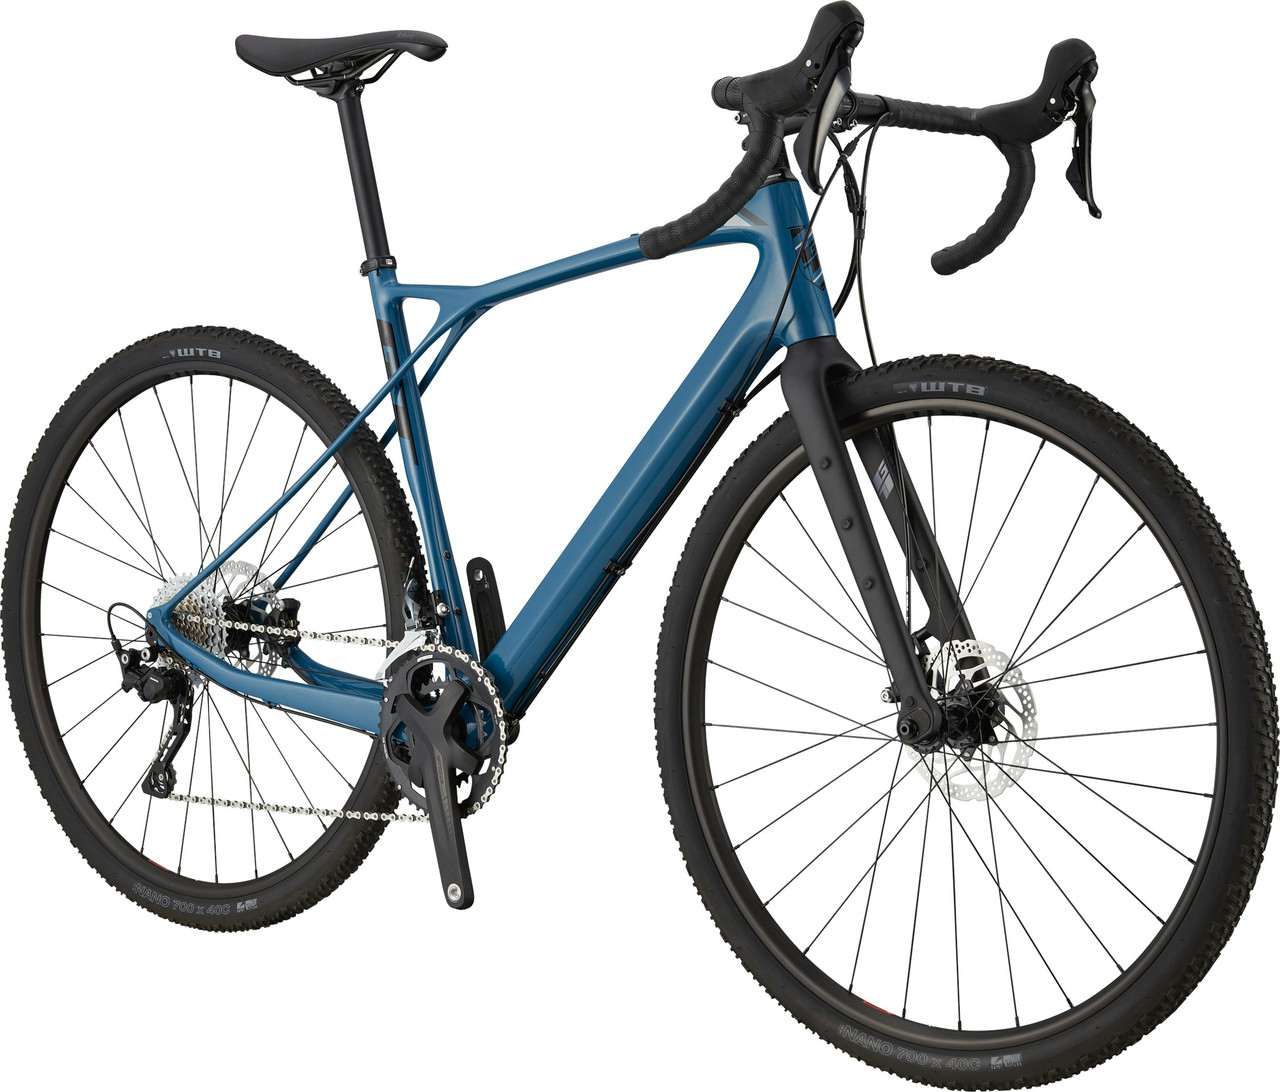 Grade Carbon Elite Bicycle Blue